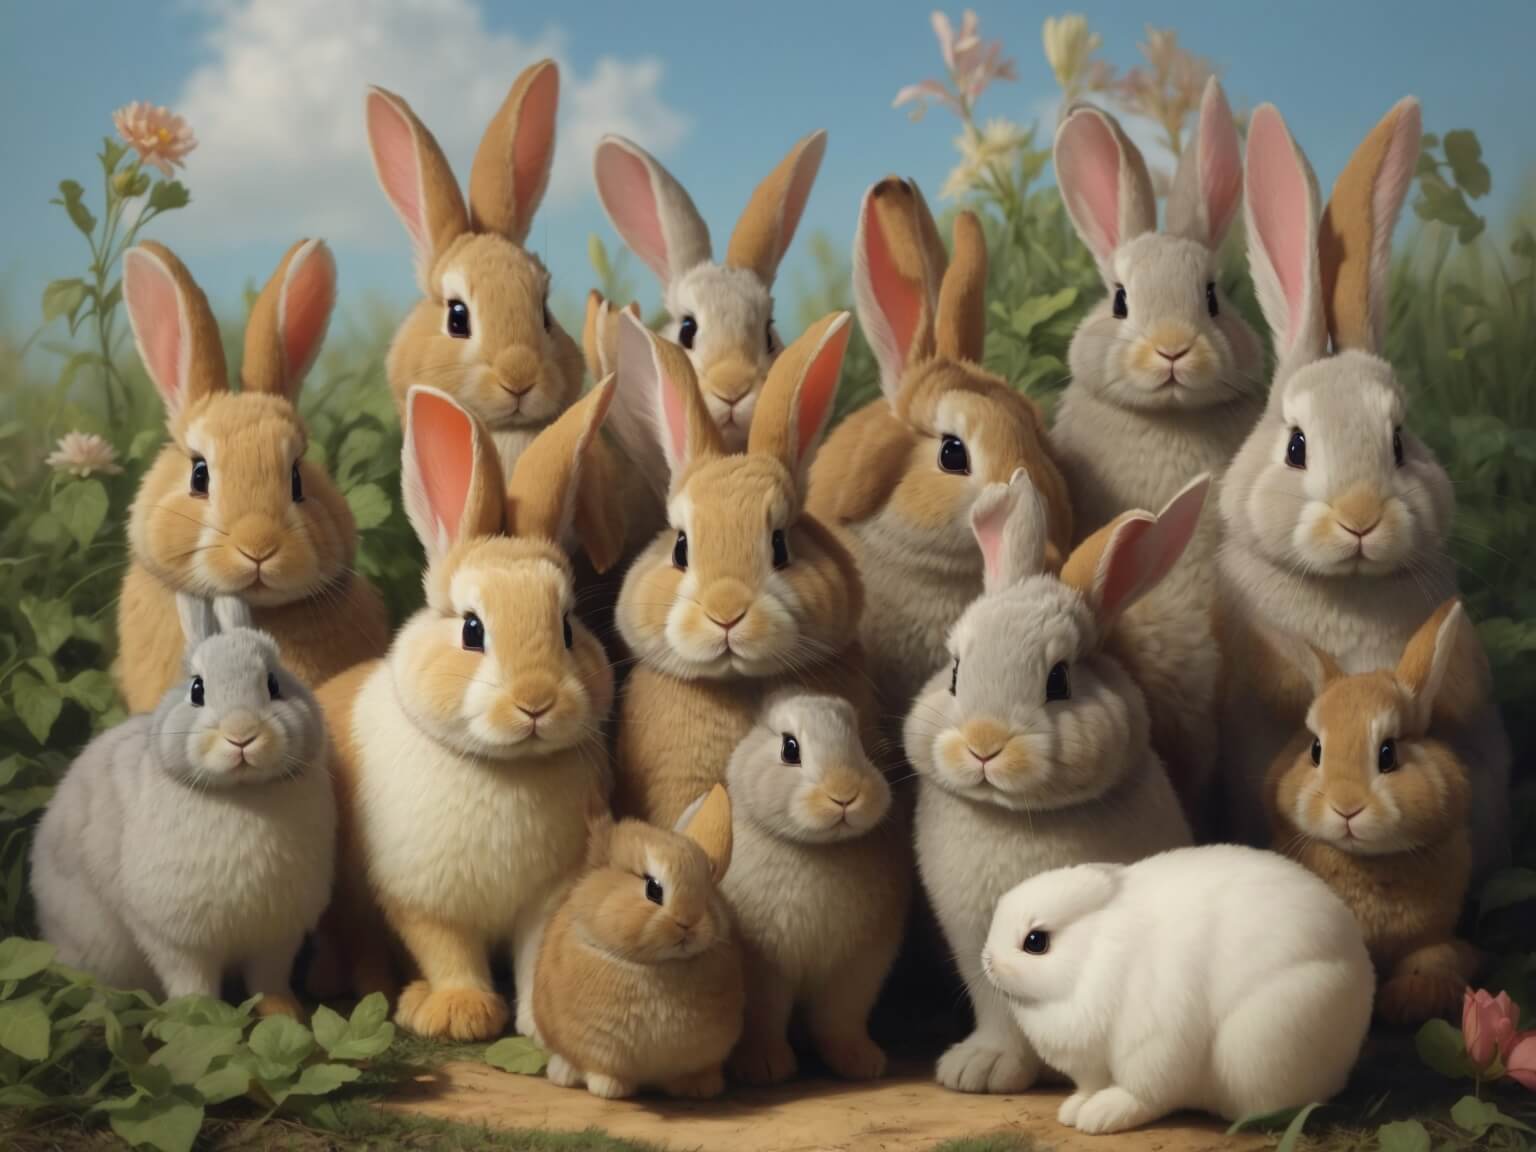 International Rabbit Day